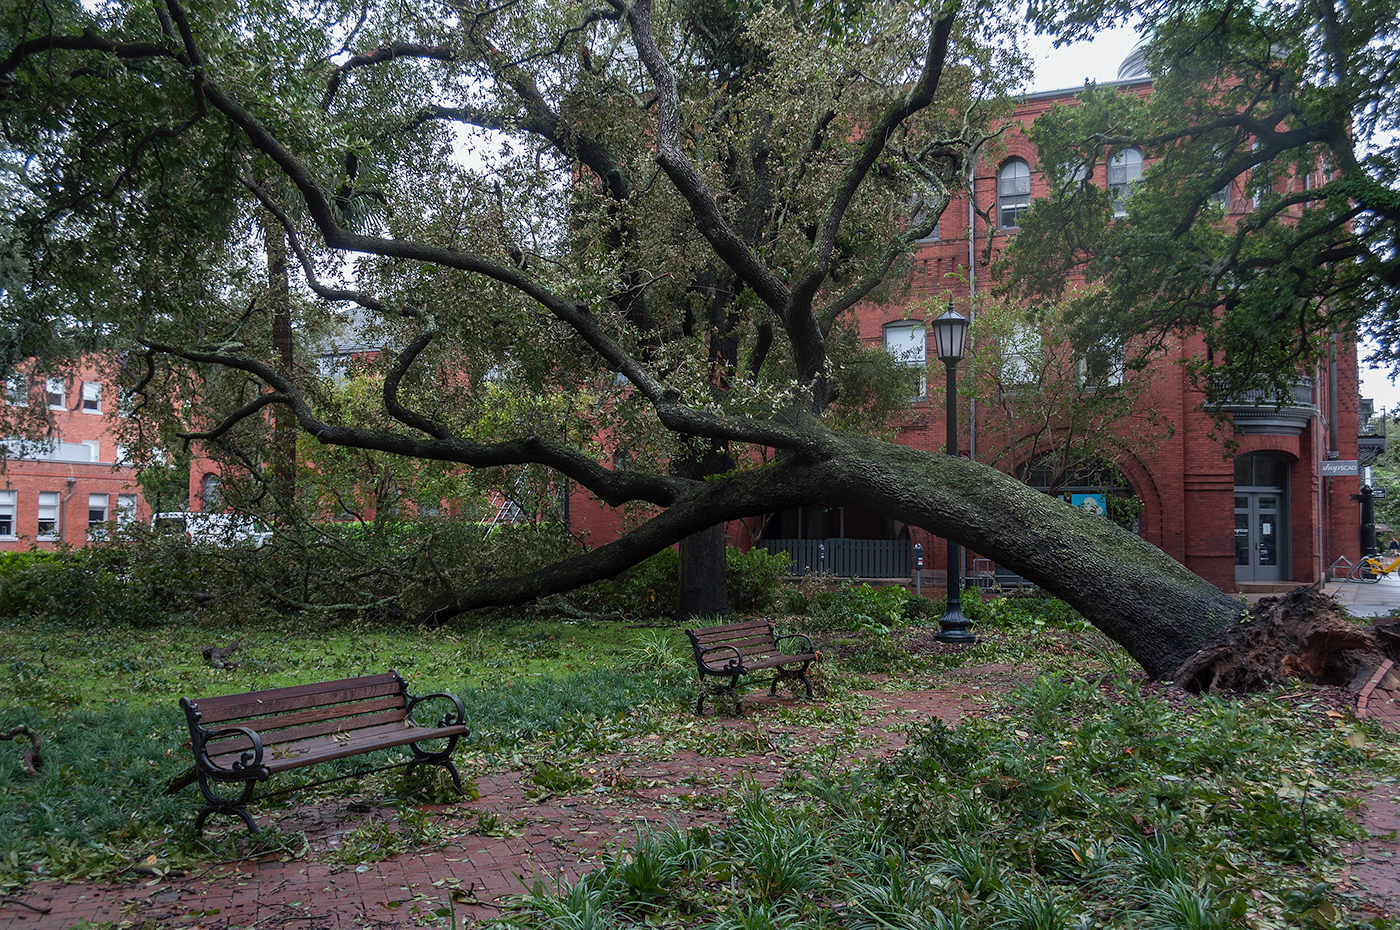 Hurricane Matthew Savannah debris Downed Trees